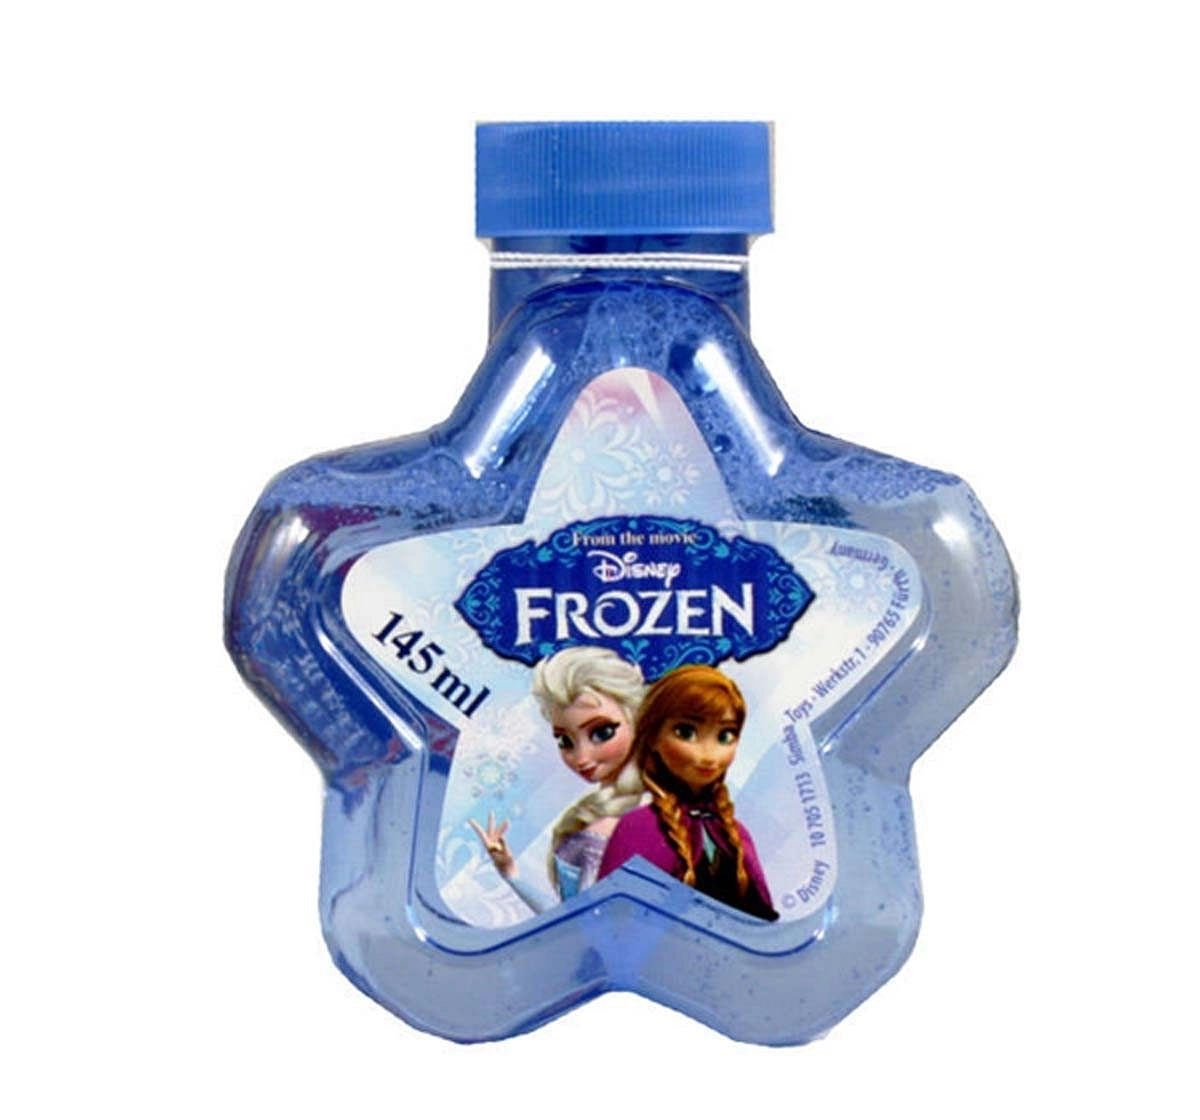 Simba Disney Frozen Star Bubble Bottle Impulse Toys for Kids Age 3Y+